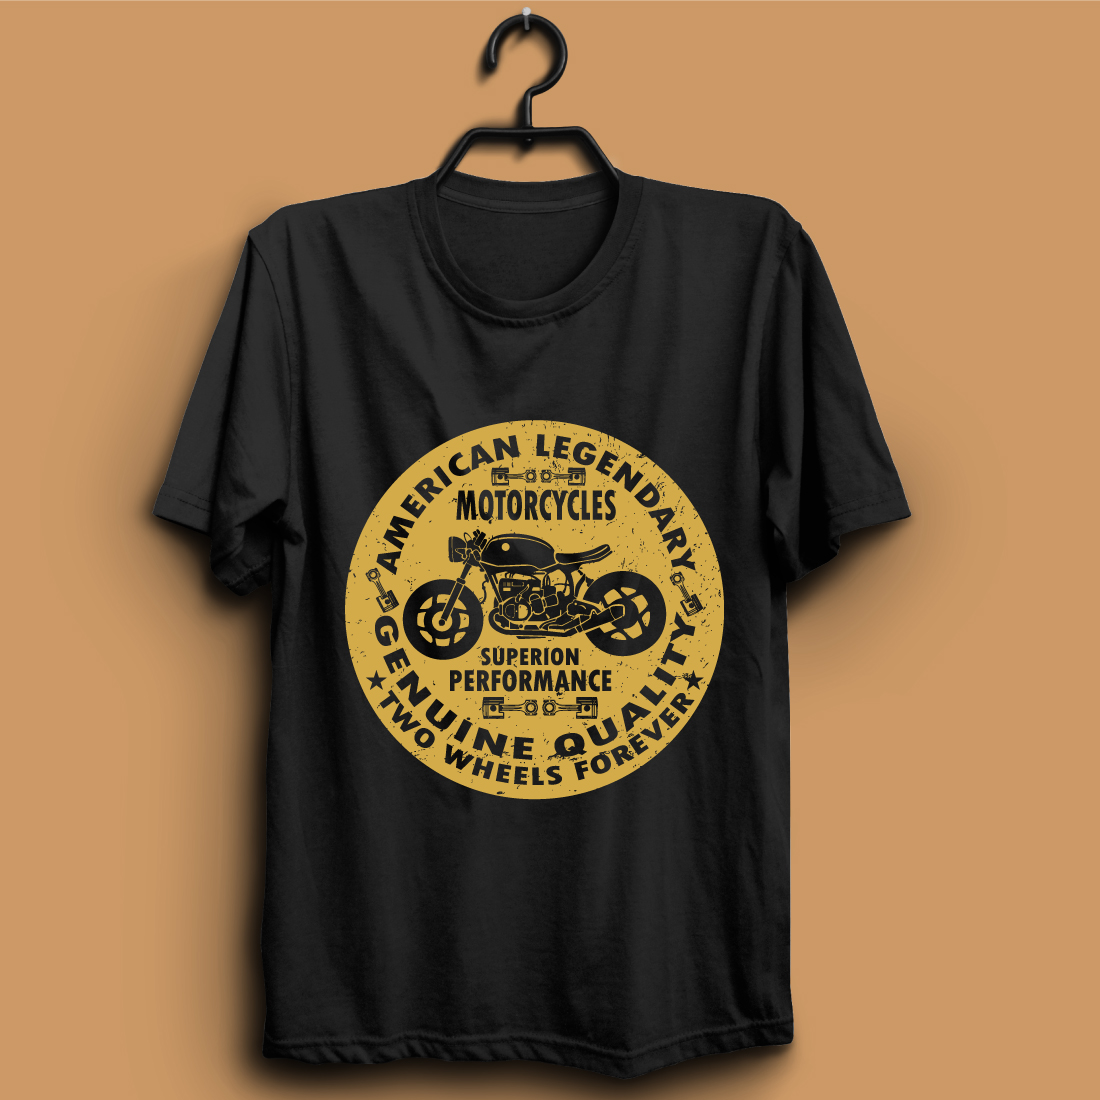 vintage motorcycle t shirt design04 713